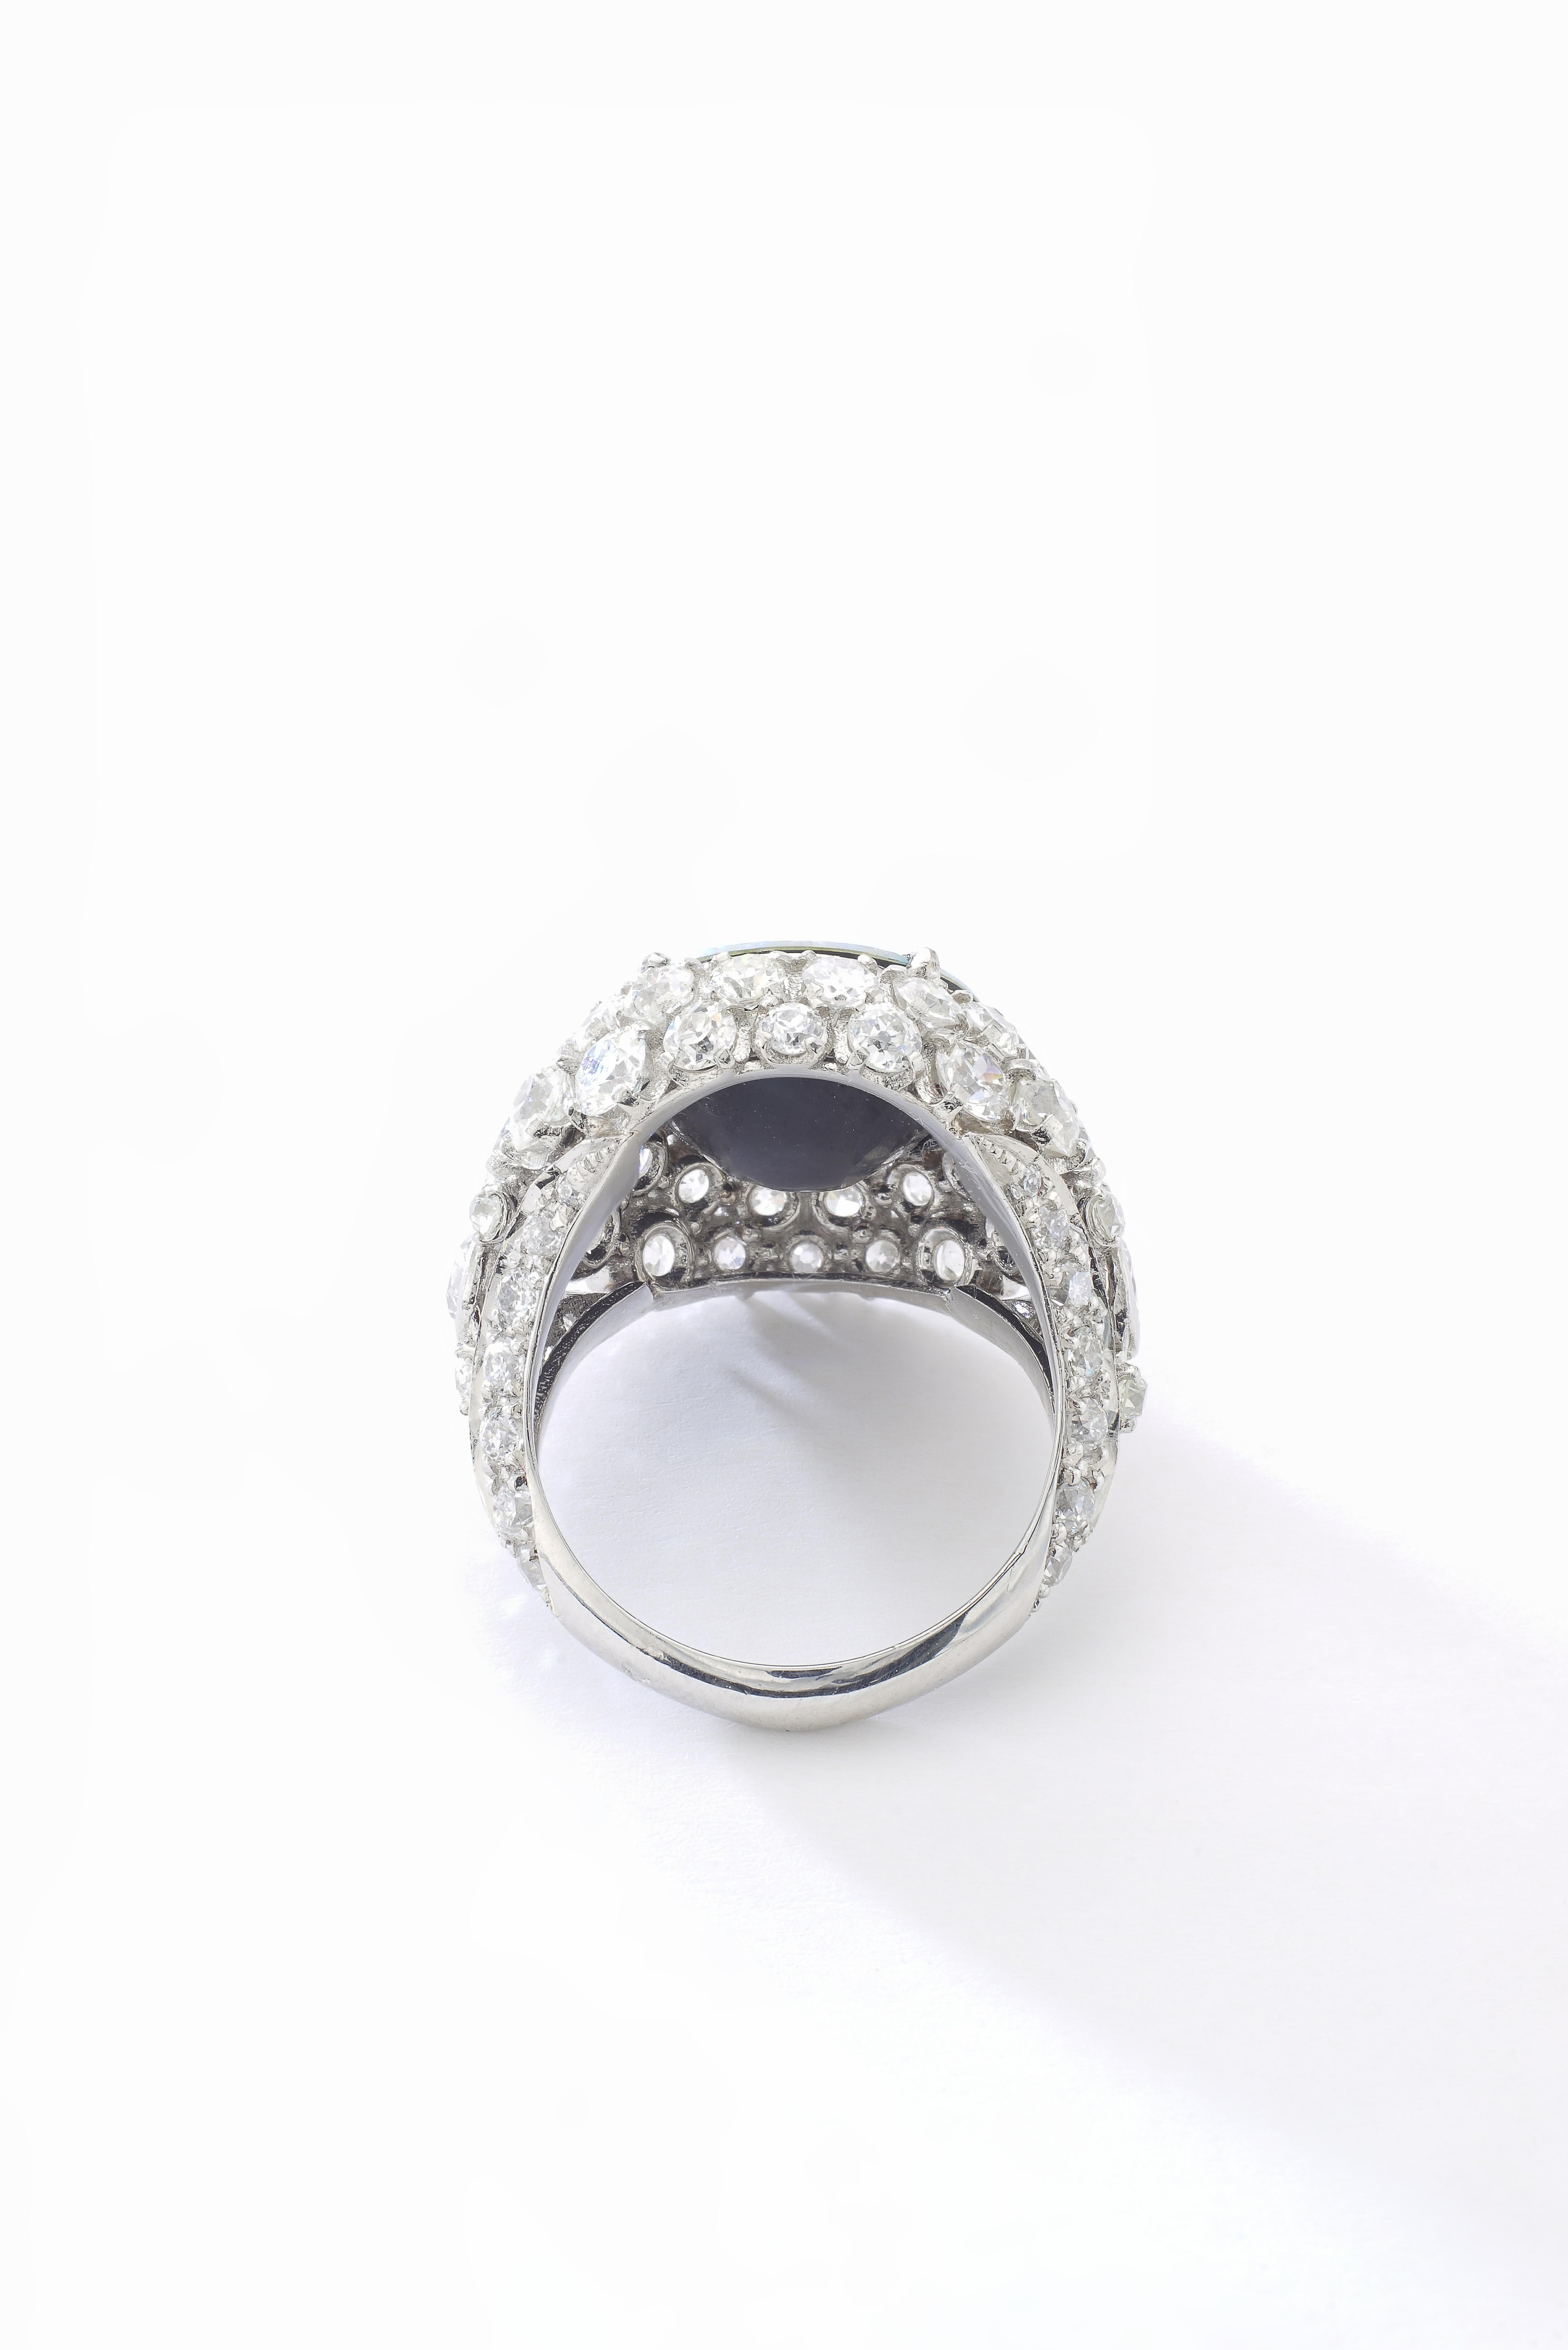 Round Cut Black Opal Diamond Platinum Ring